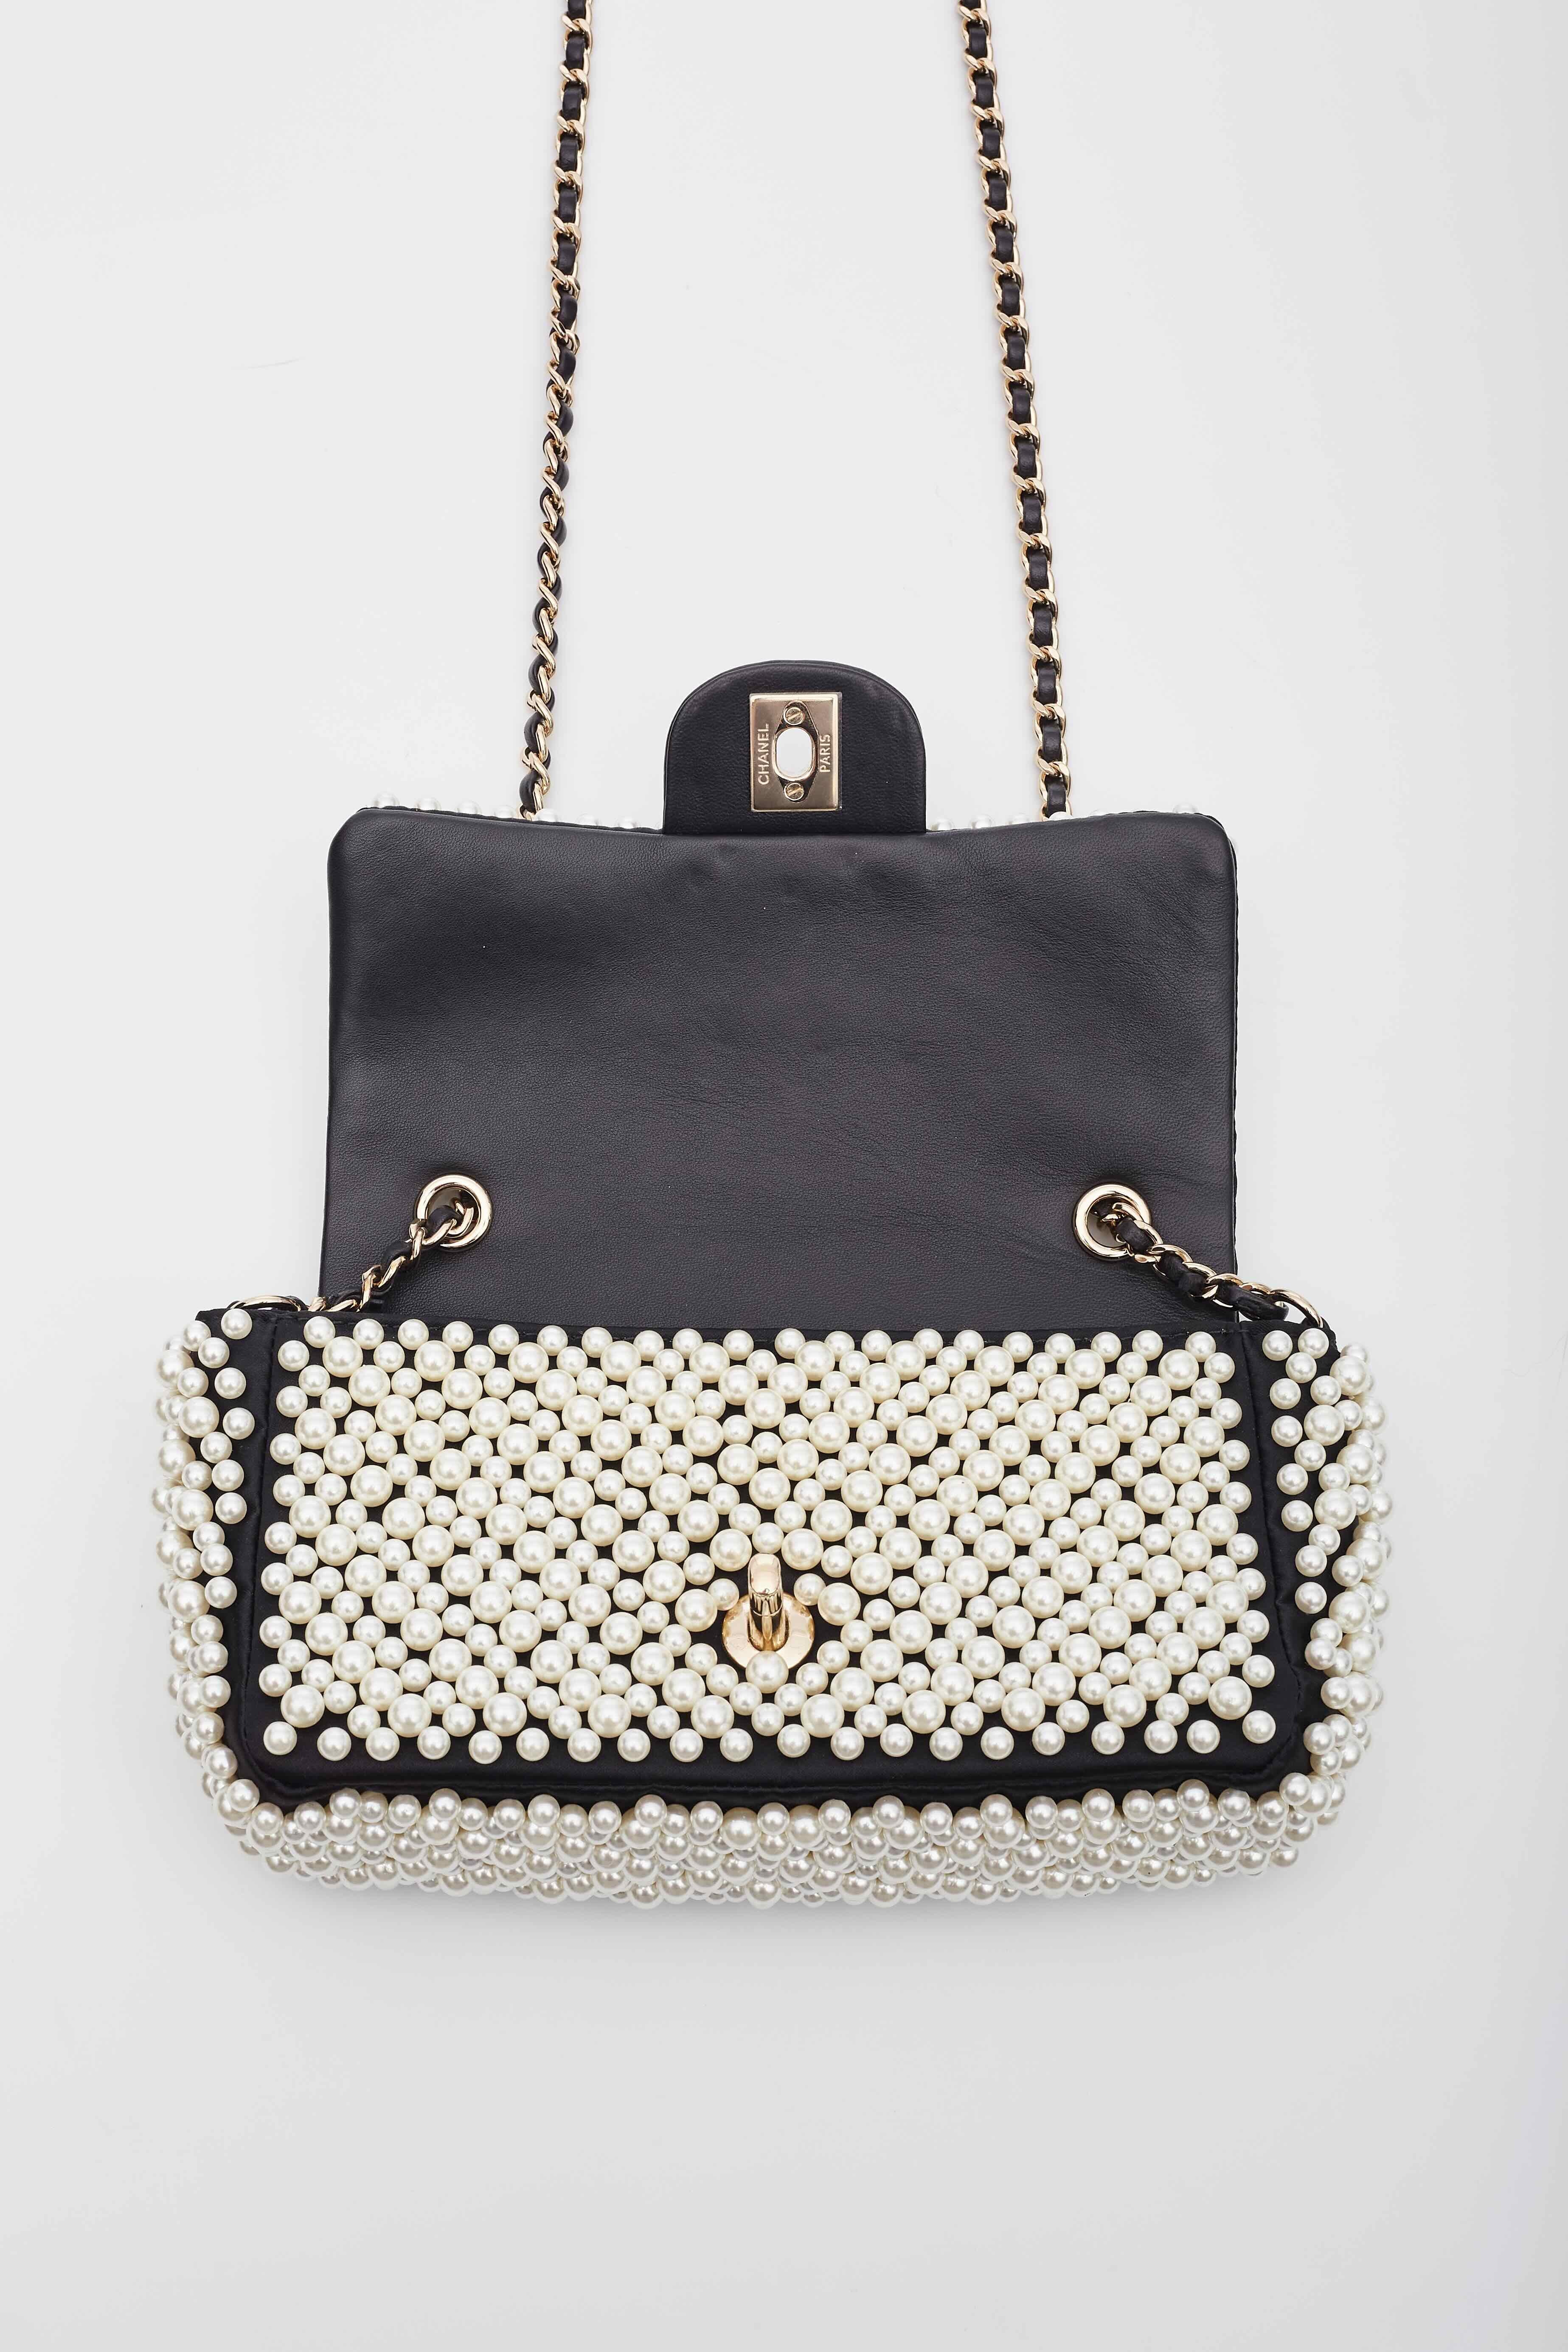 Chanel Black Lambskin Pearl on Flap Bag For Sale 3